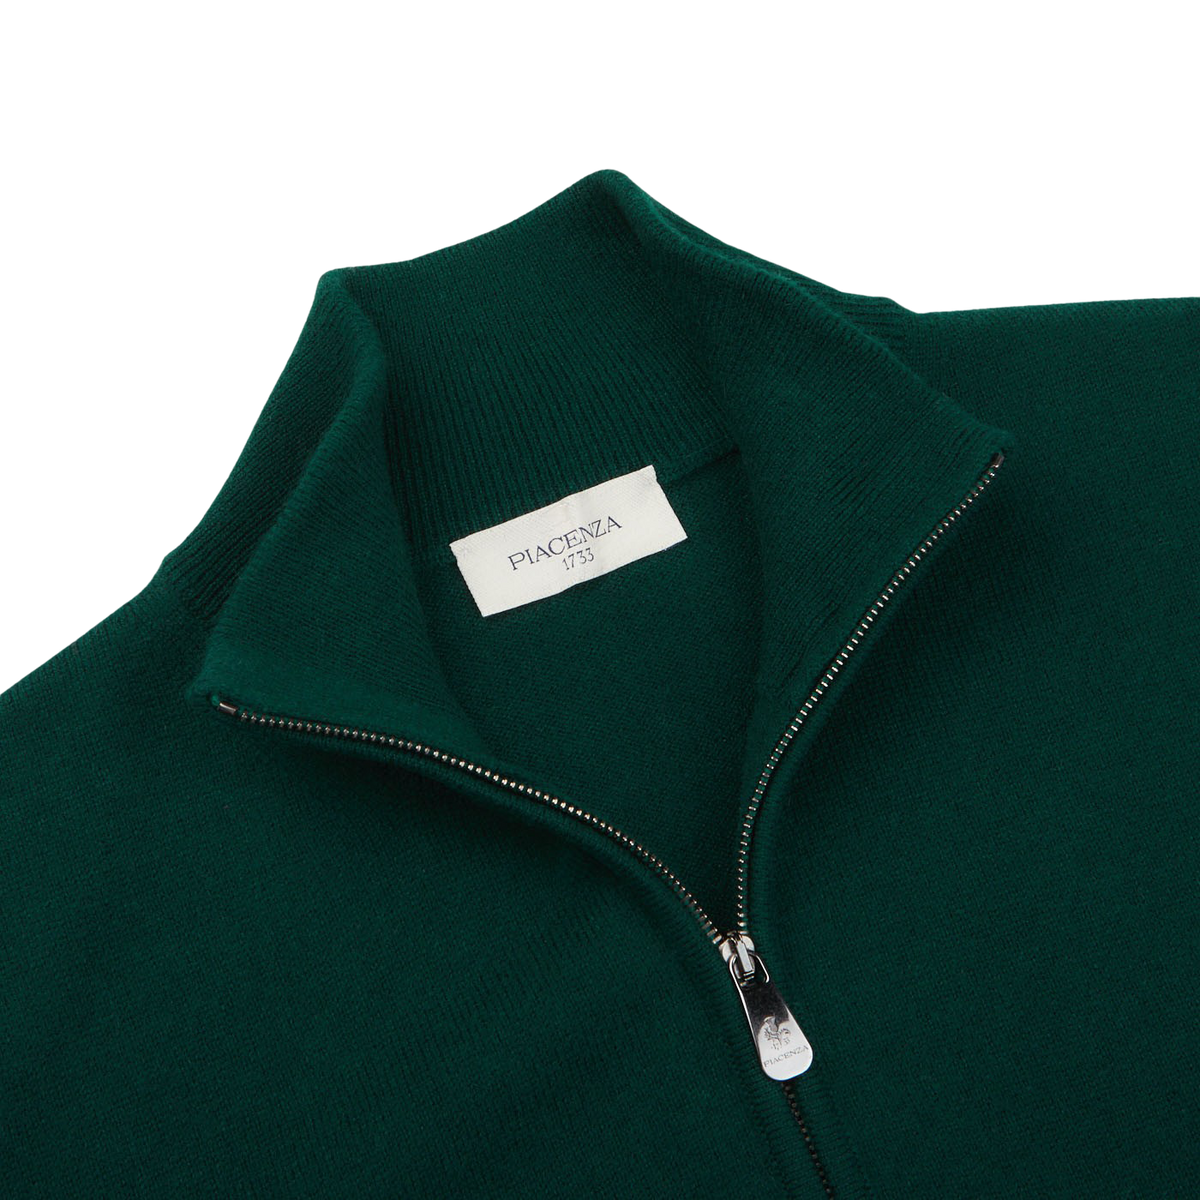 Hammacher Mens Washable Cashmere Zip Front Sweatshirt Size LARGE Green  Olive